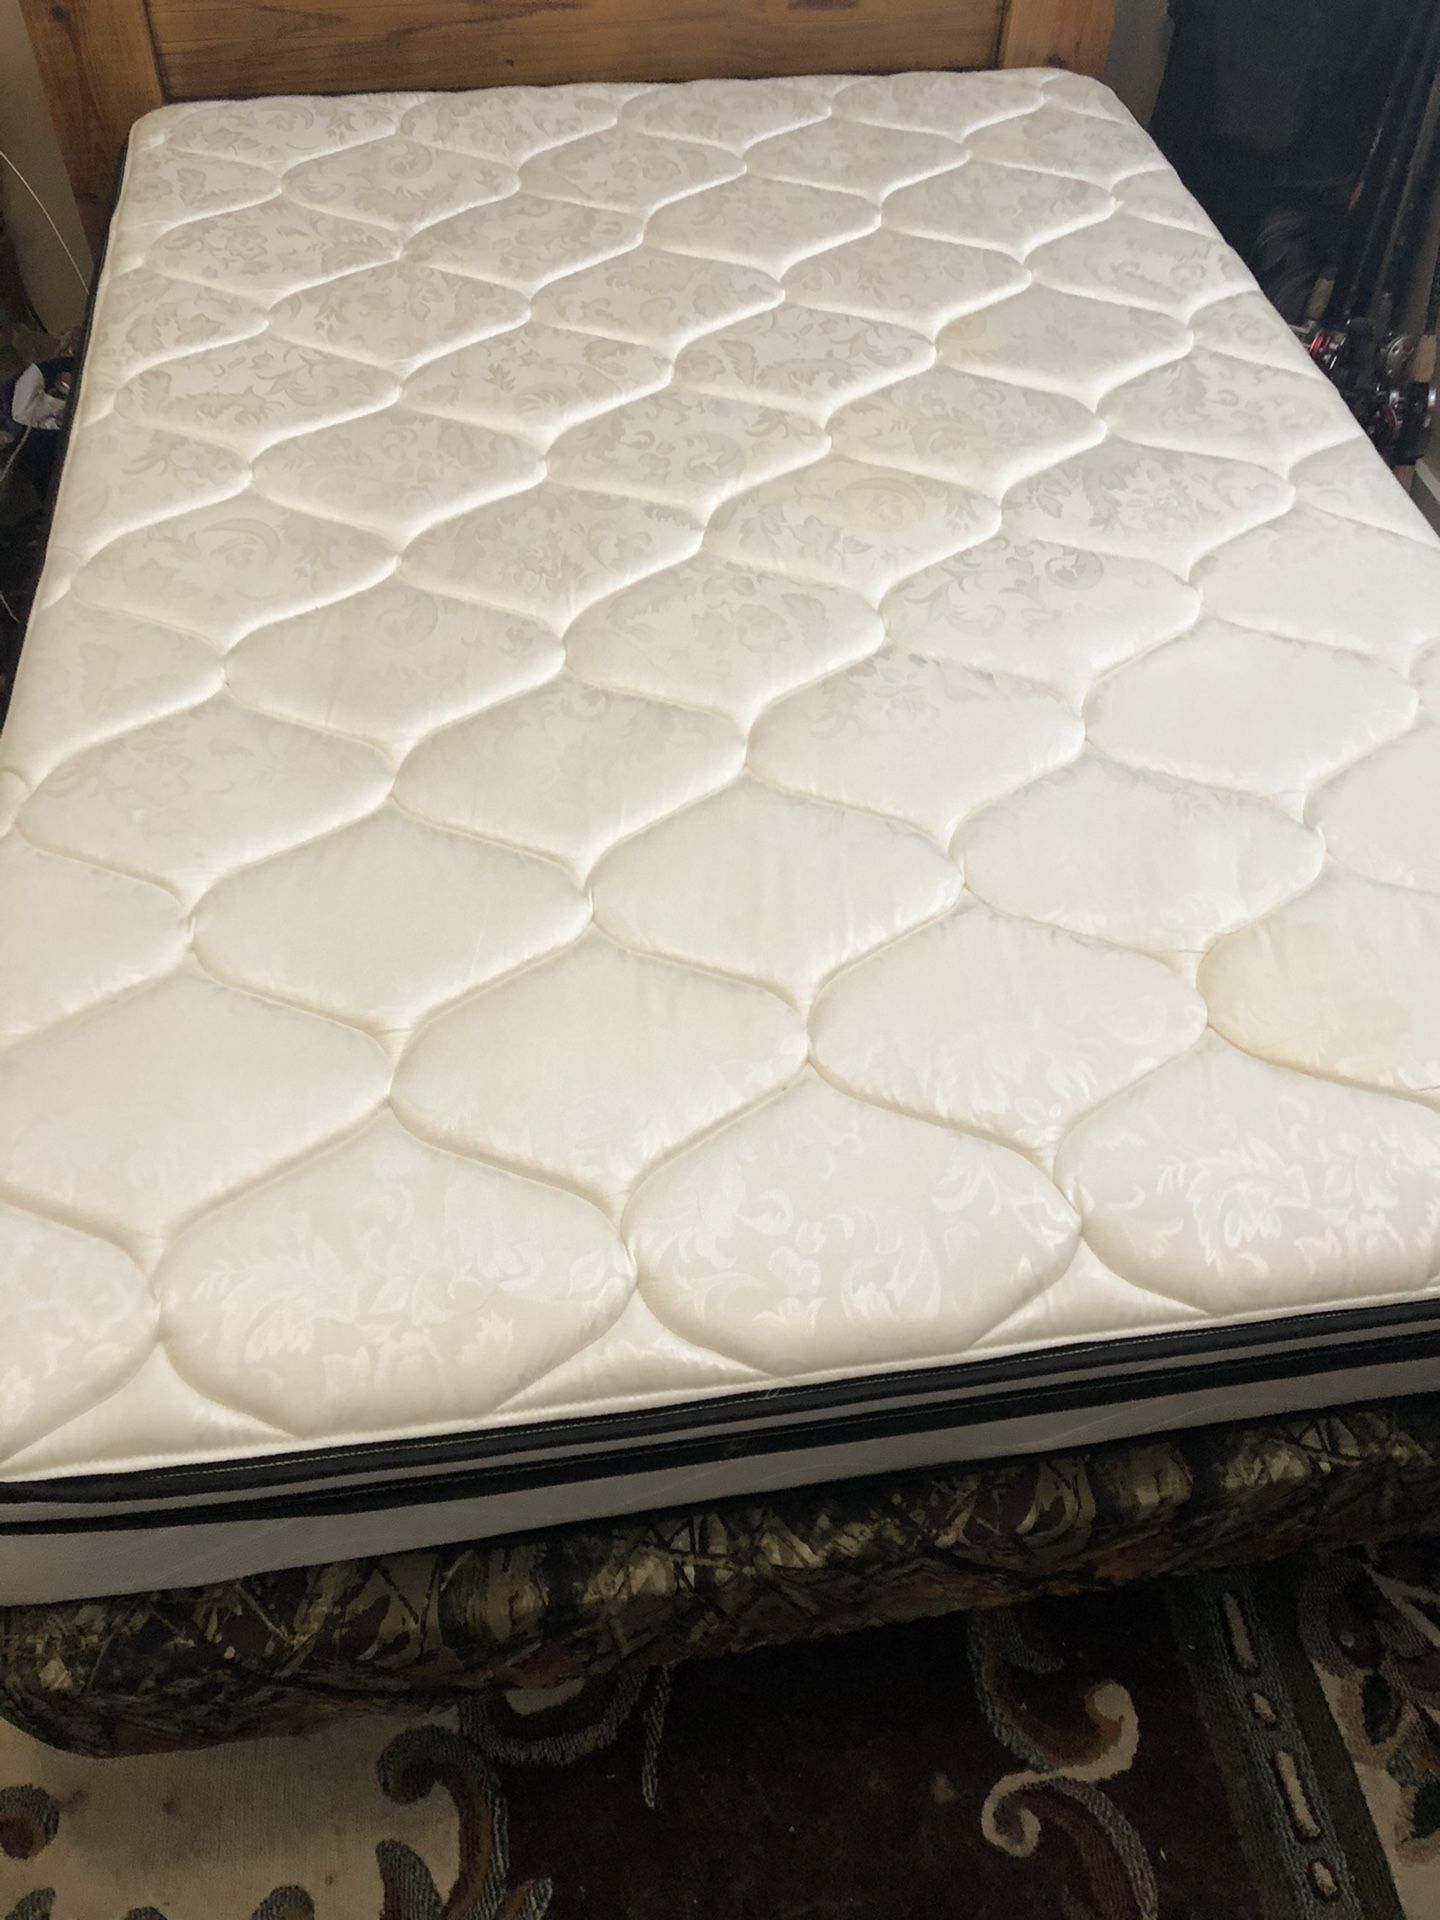 Full size inter spring mattress